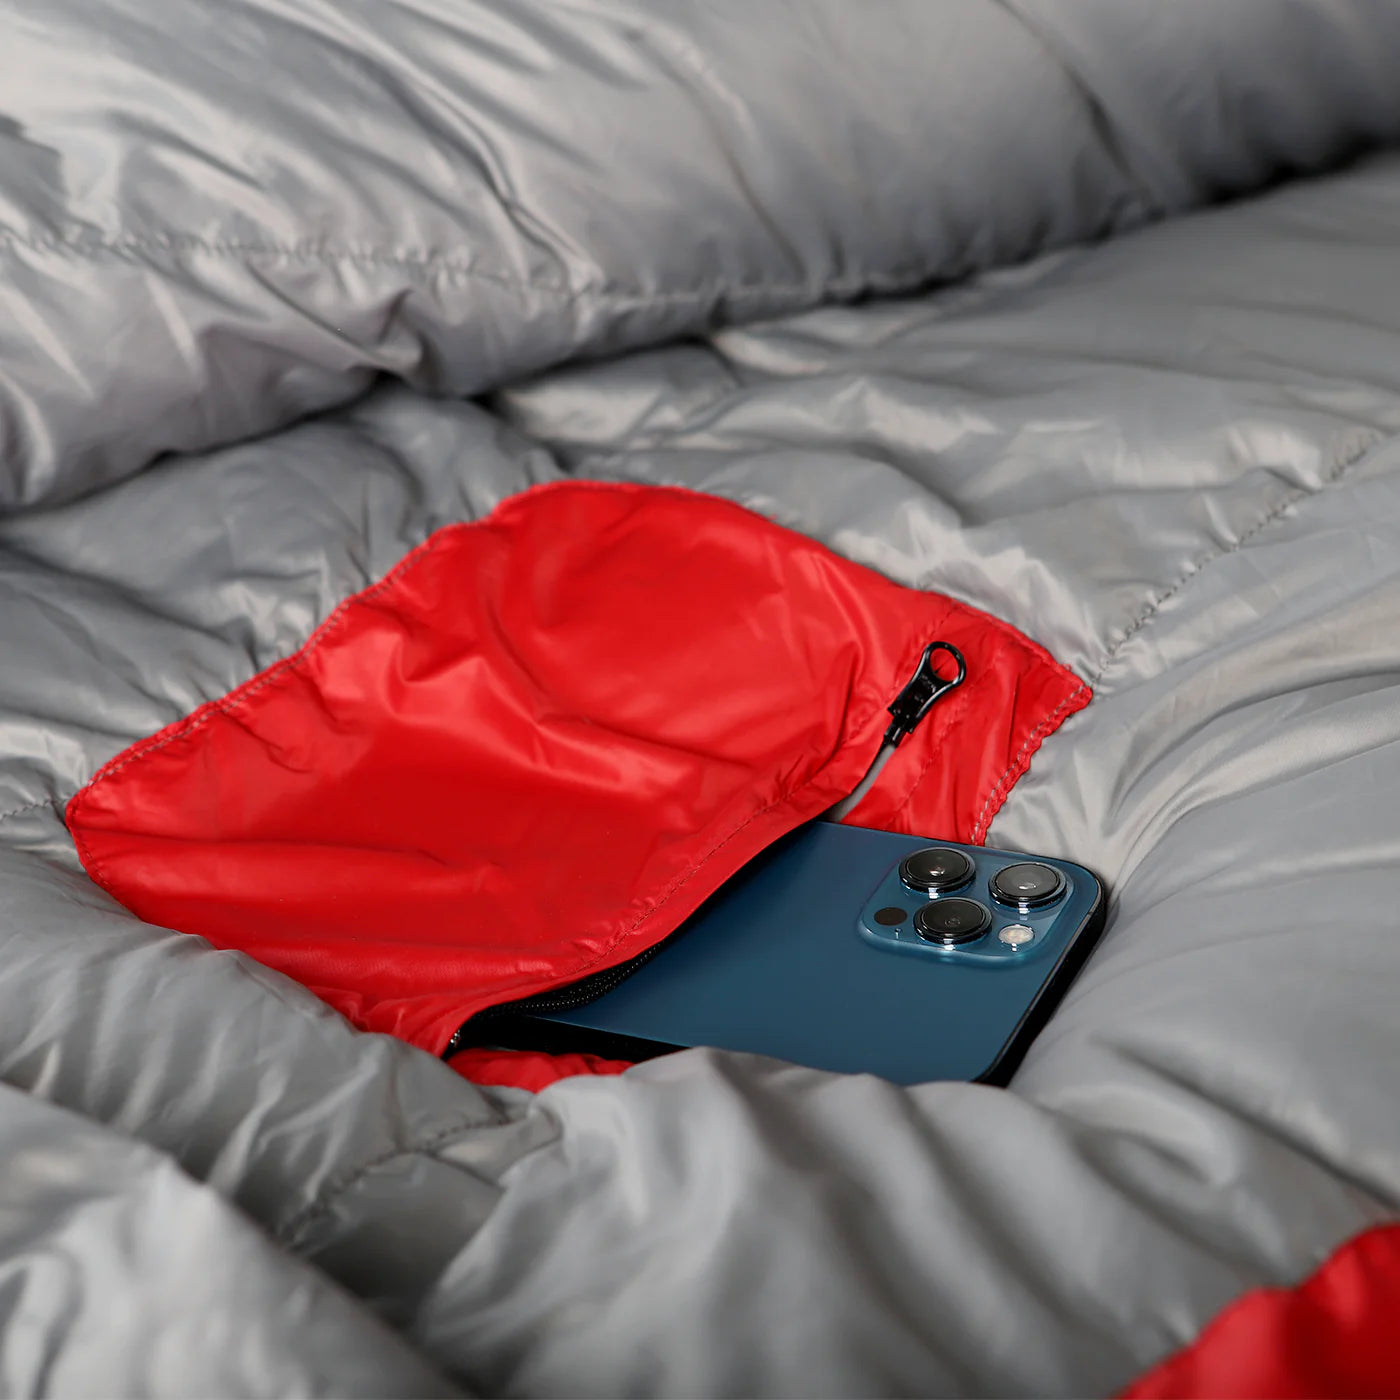 iKamper RTT Sleeper Double Sleeping Bag